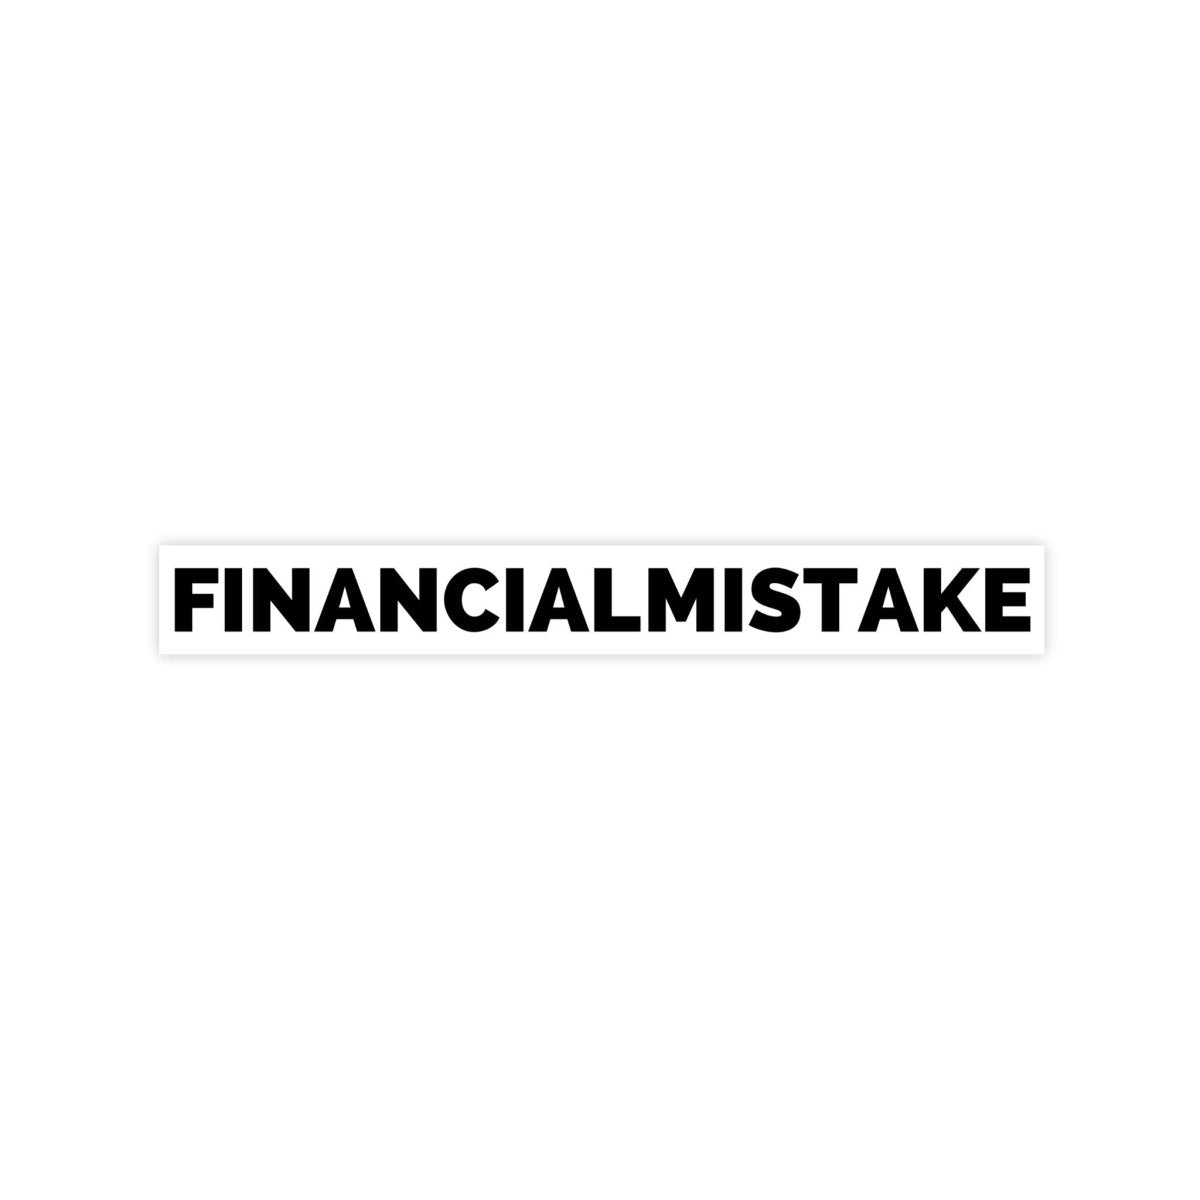 Financial Mistake Sticker - stickerbullFinancial Mistake StickerRetail StickerstickerbullstickerbullFinancialMistake_WhiteWhiteFinancial Mistake Sticker